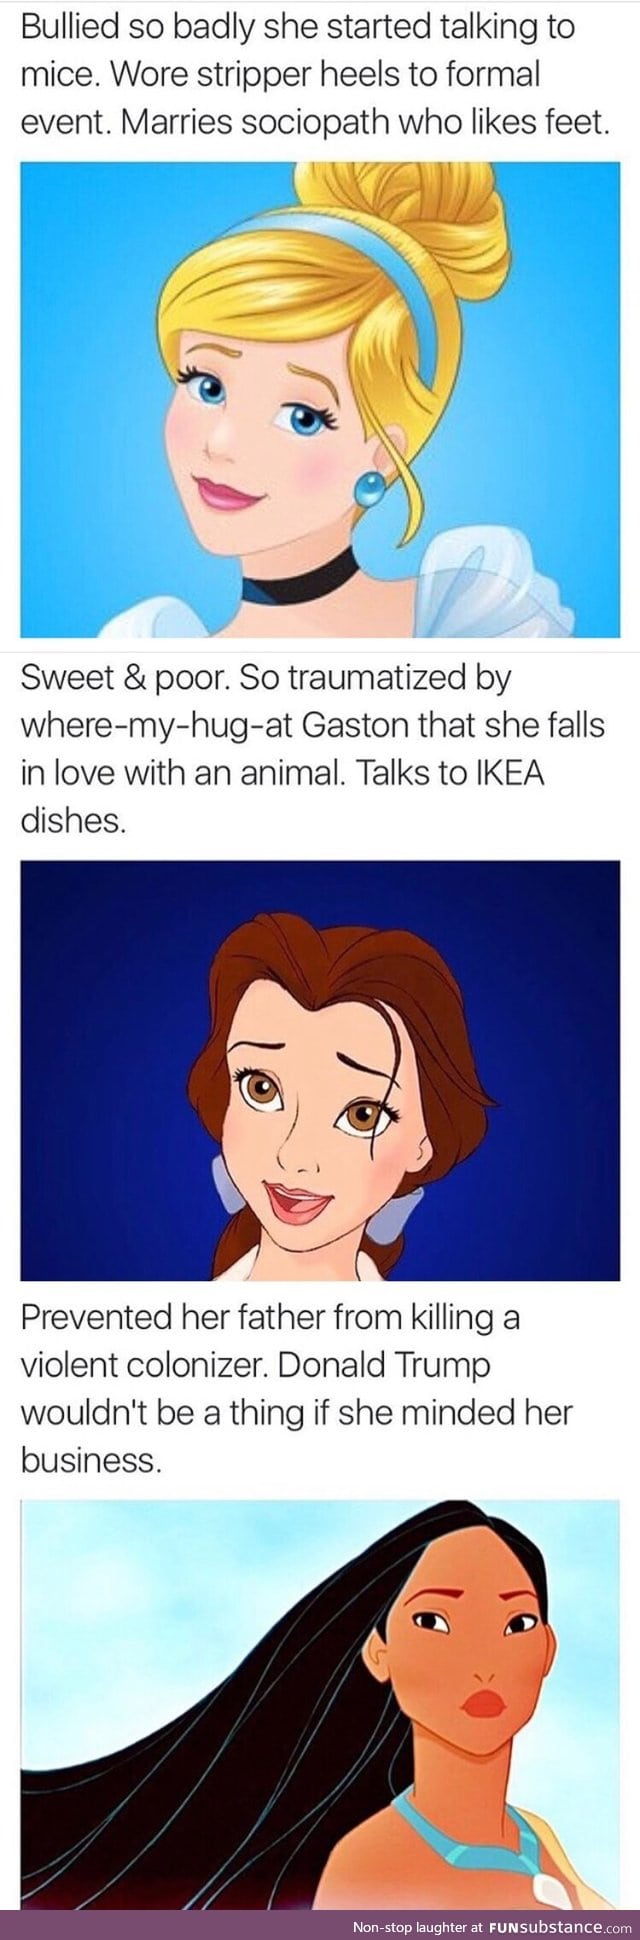 Disney princess with problems